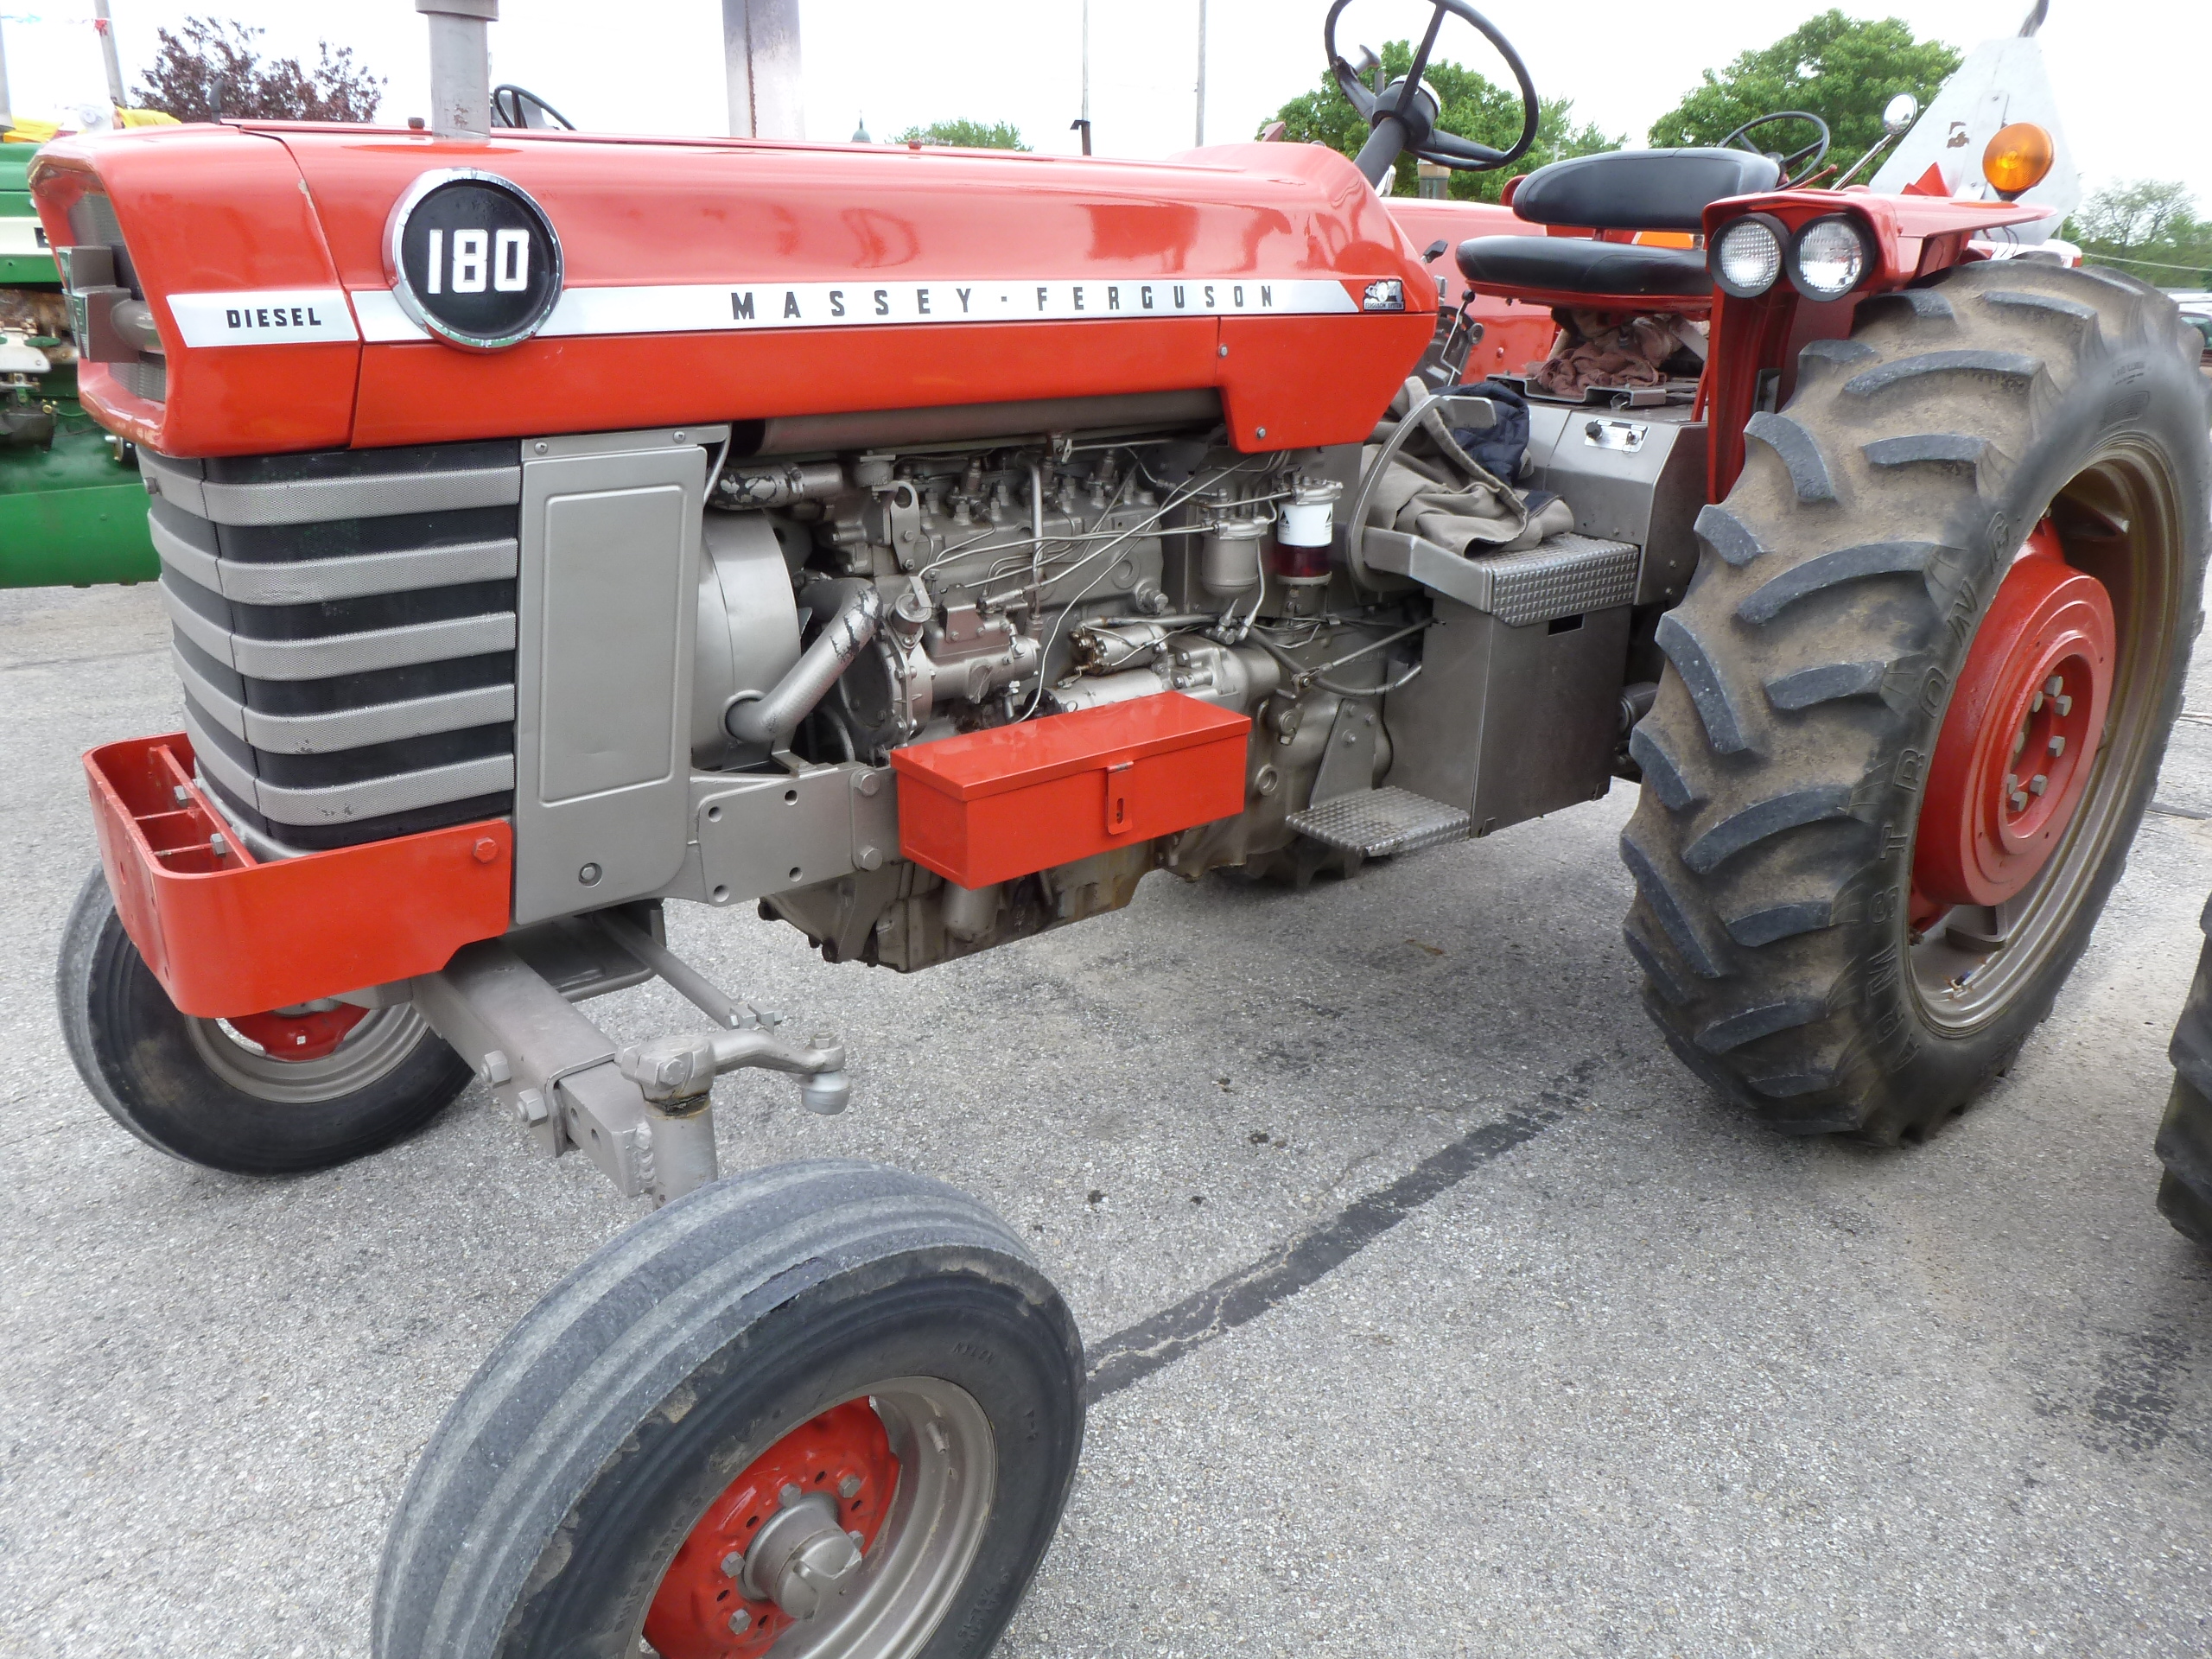 Massey-Ferguson 180 | KICD Antique Tractor Ride | Pinterest